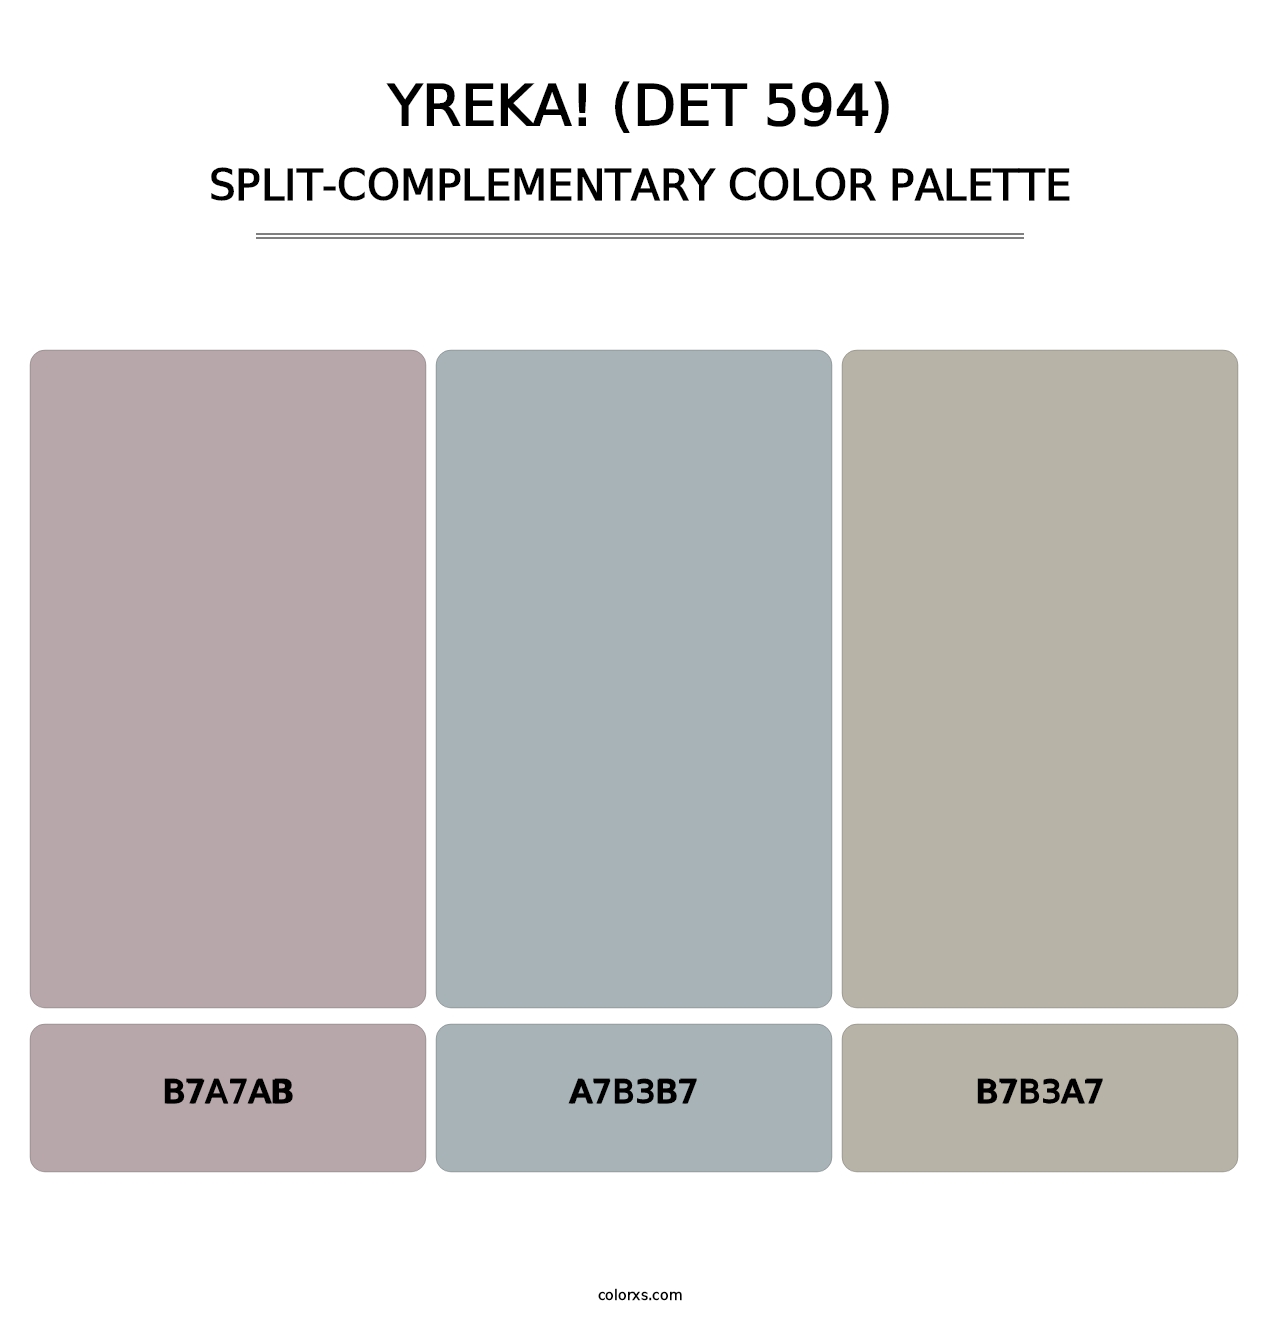 Yreka! (DET 594) - Split-Complementary Color Palette